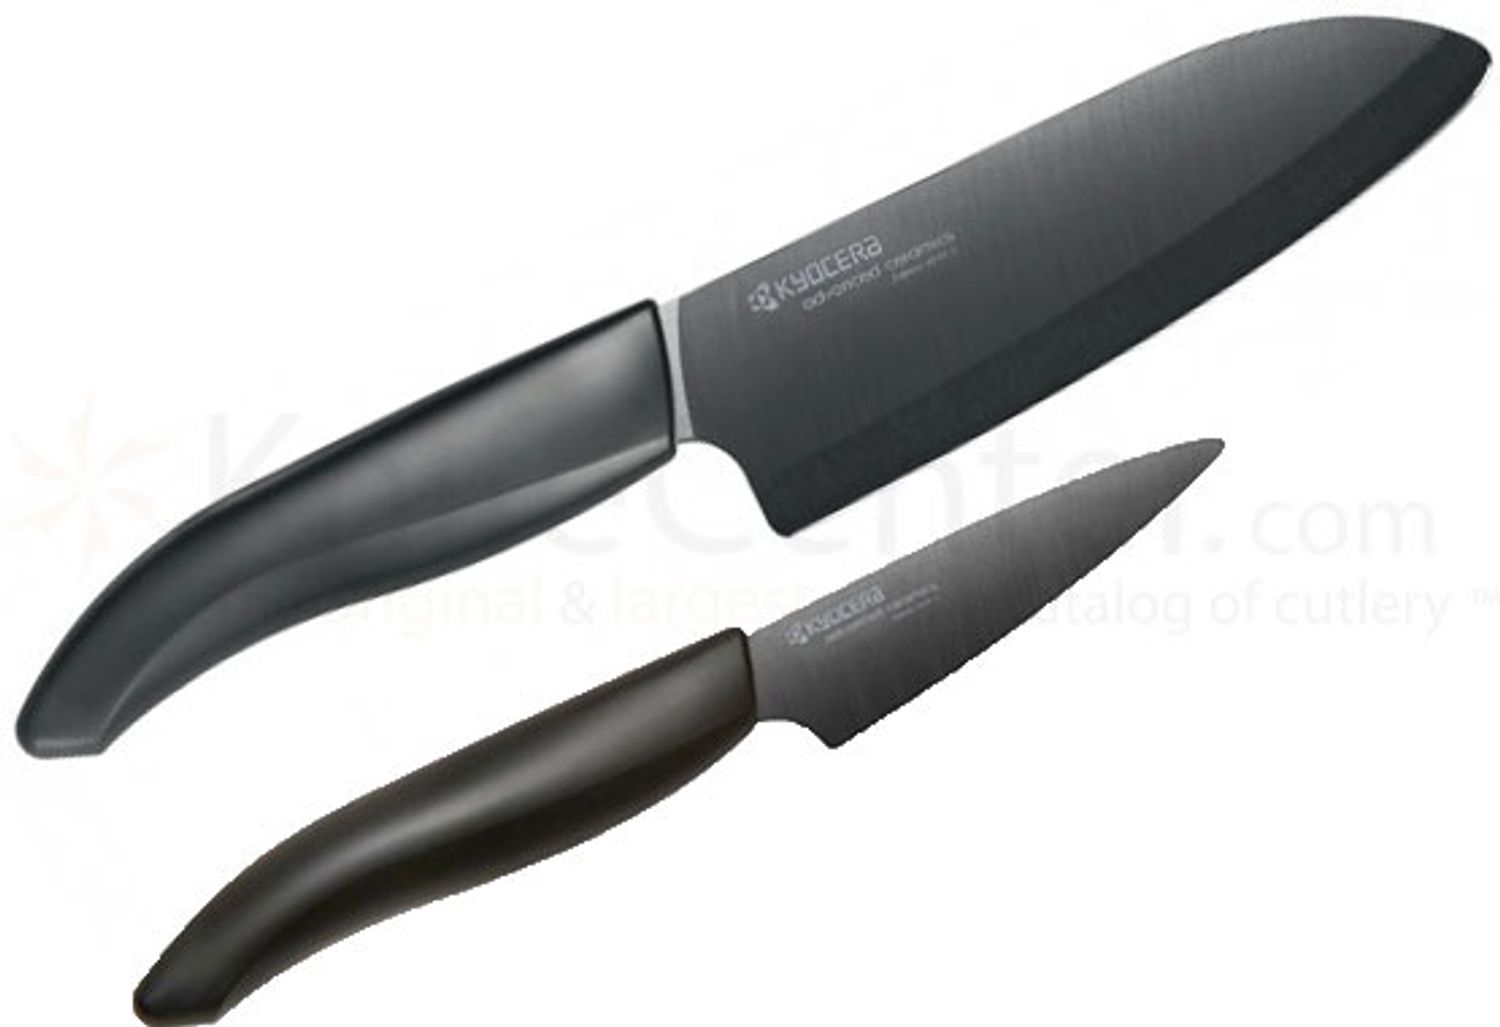 Kyocera Ceramic Knife Advanced Revolution 4-Piece Set